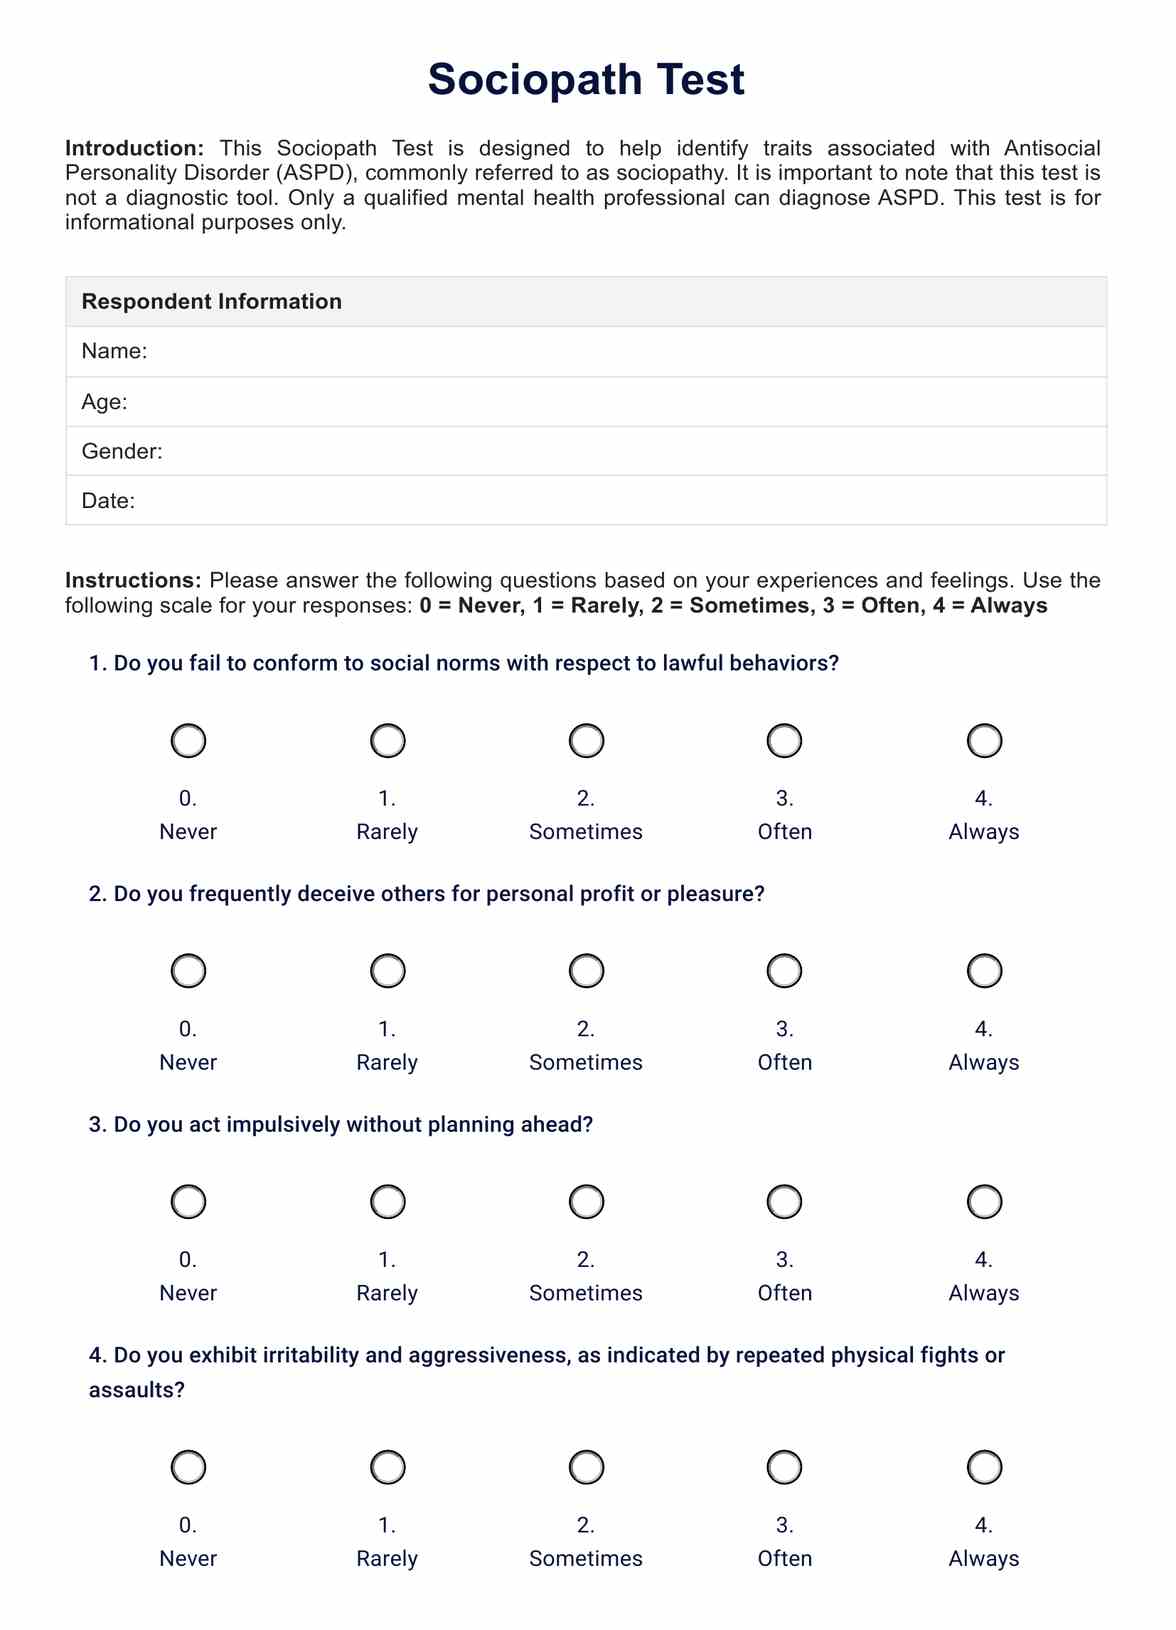 Sociopath Test PDF Example